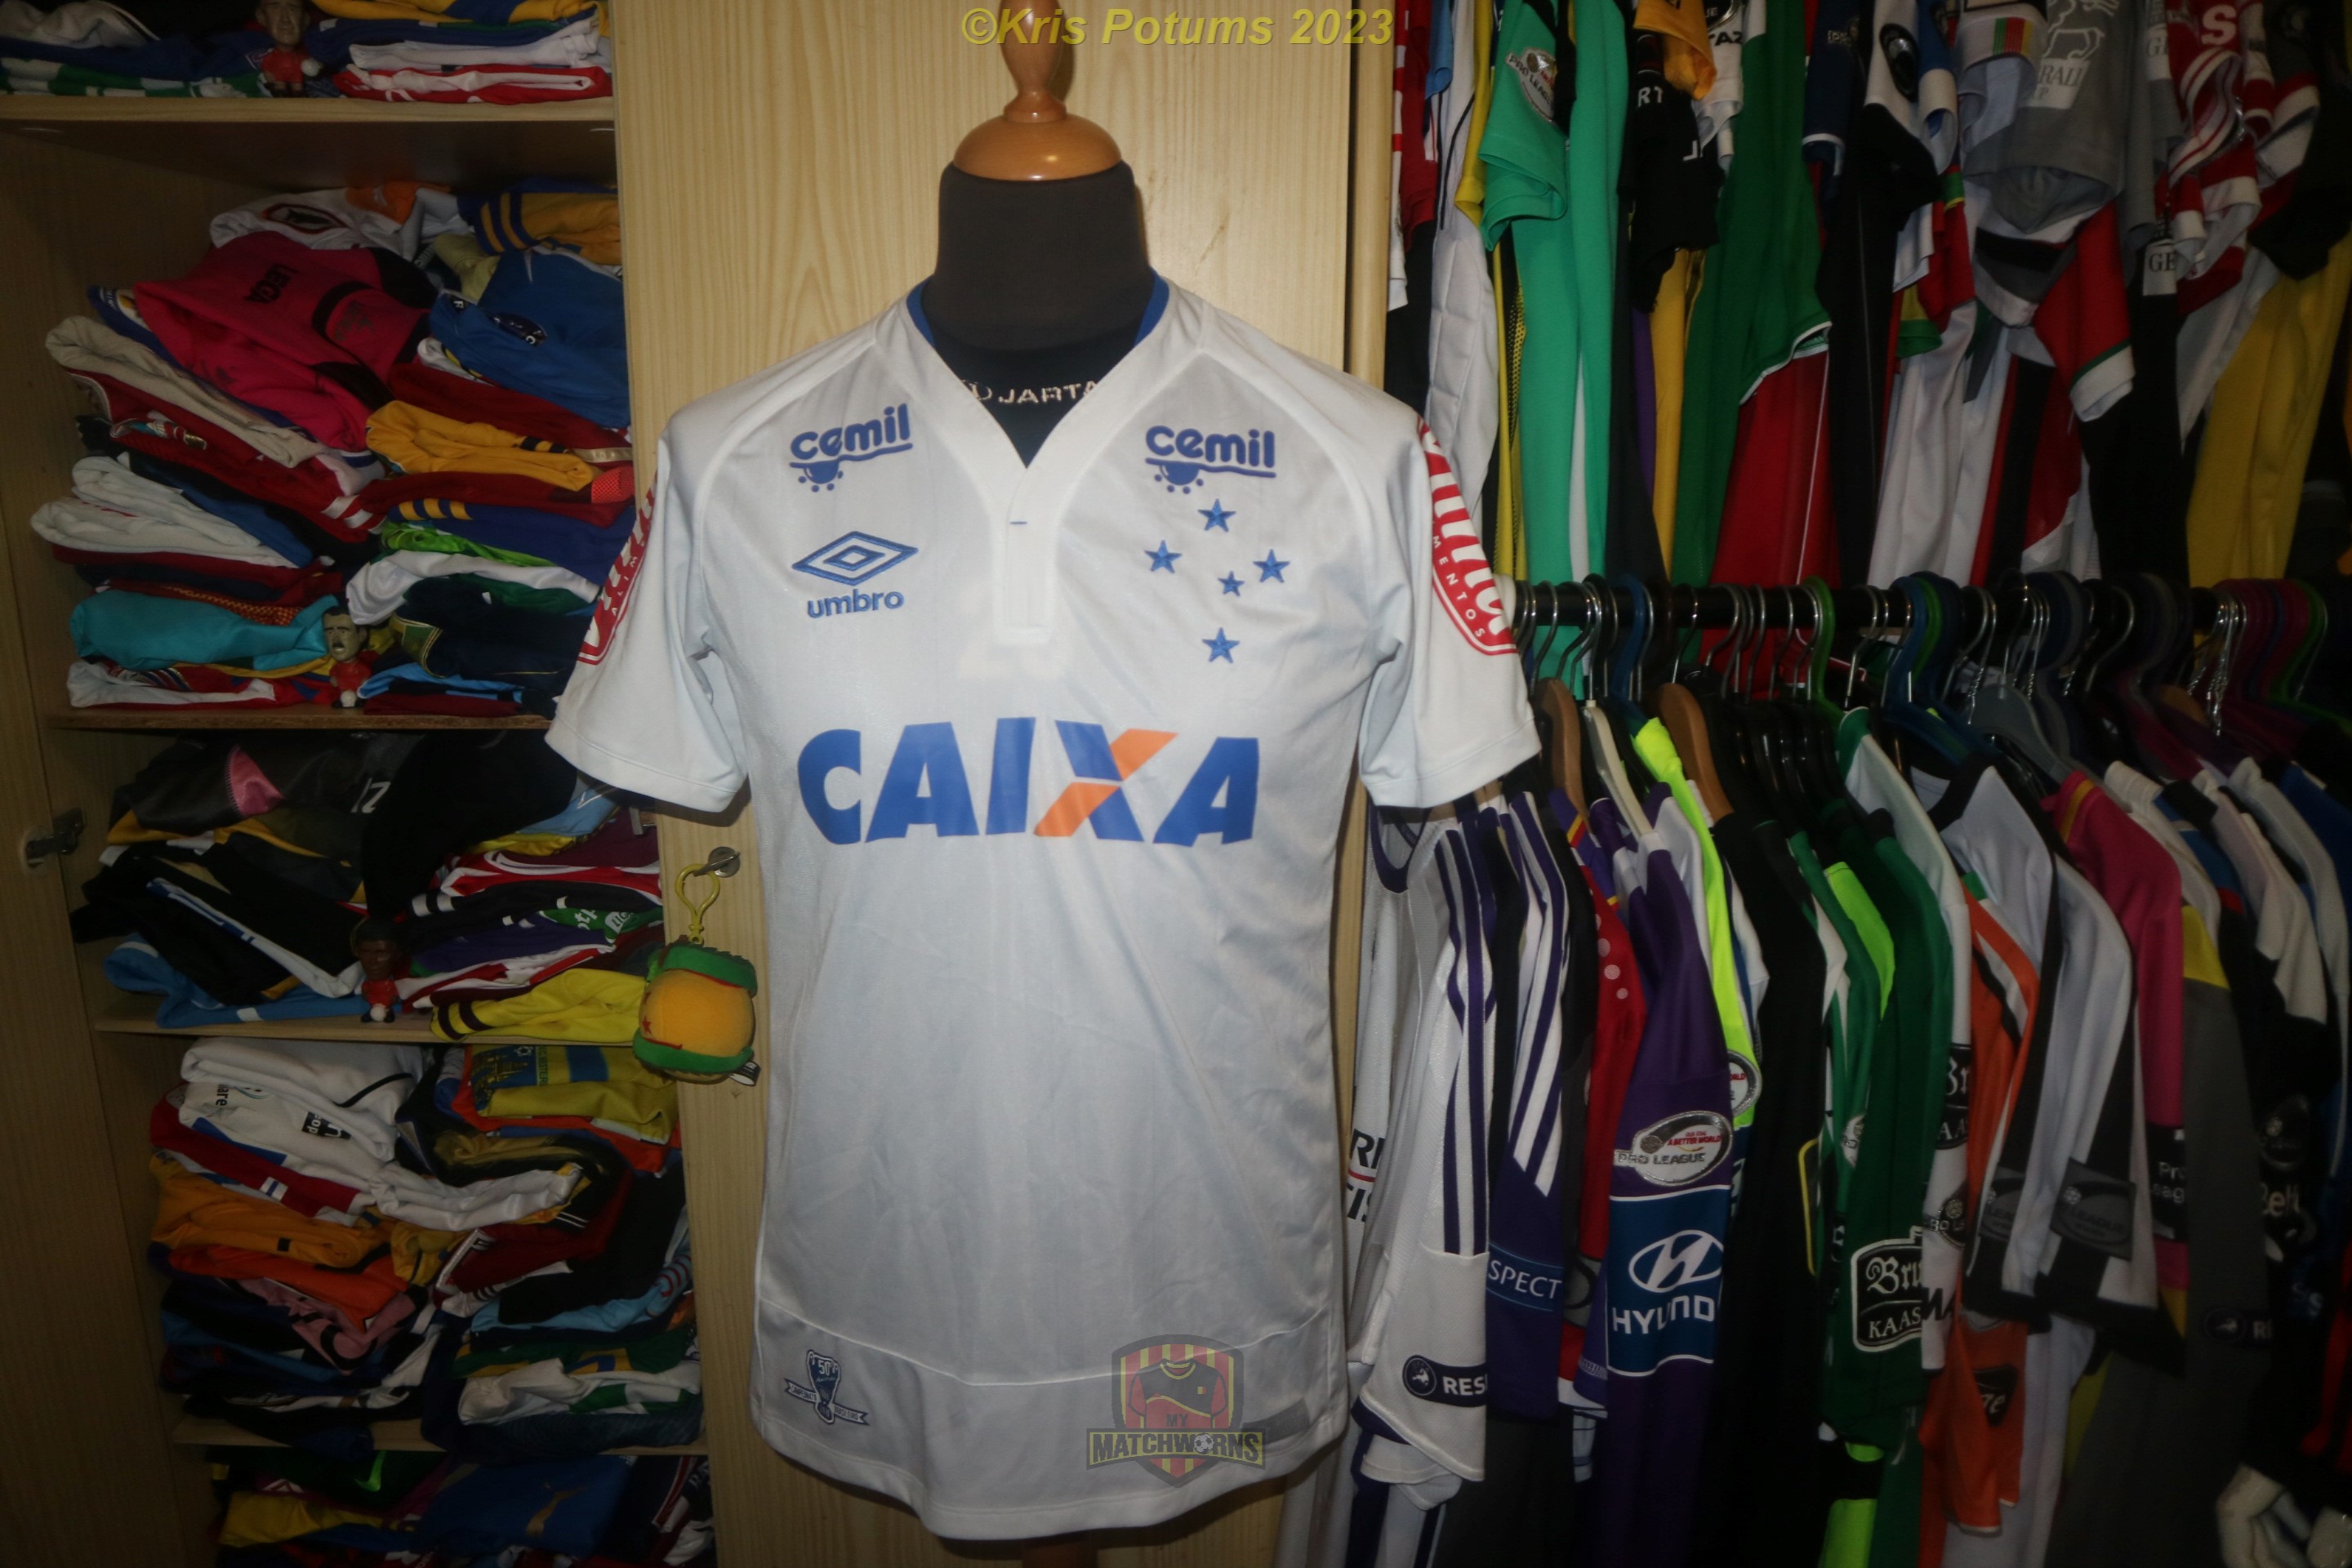 Cruzeiro